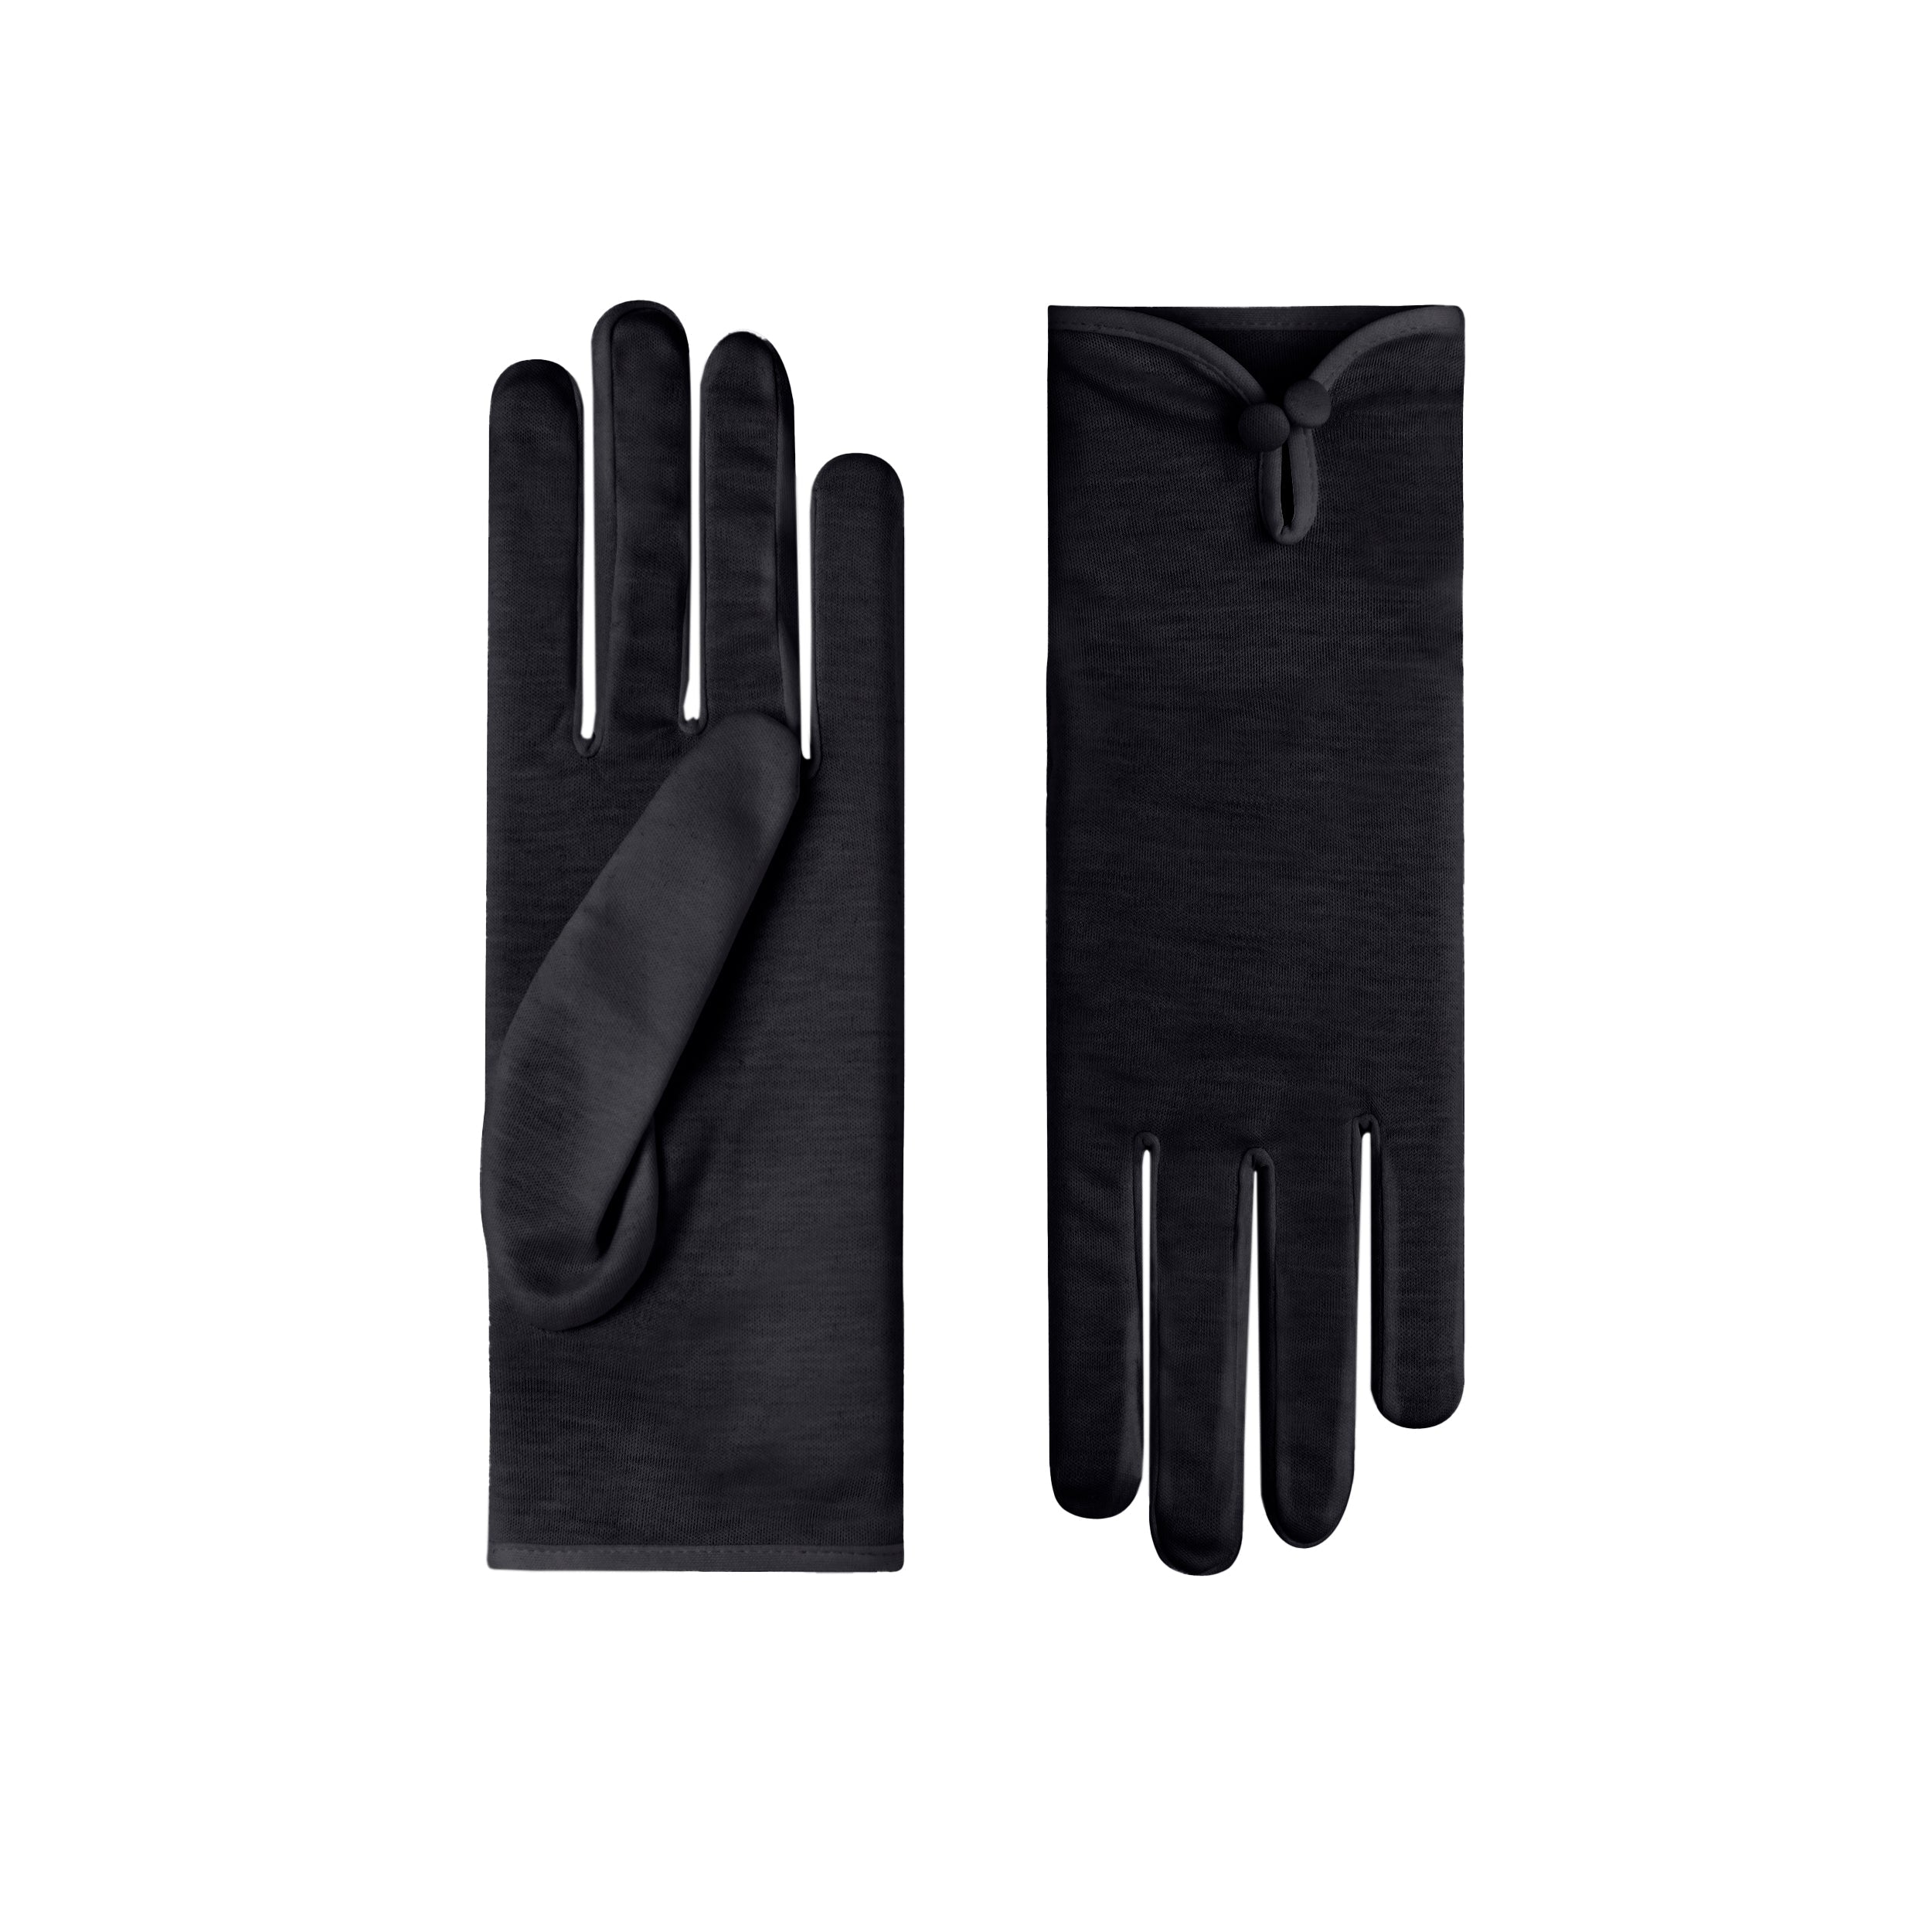 Cornelia James - Black Cotton Day Gloves - Isla - Size Large (8½) - Handmade Cotton Gloves by Cornelia James product